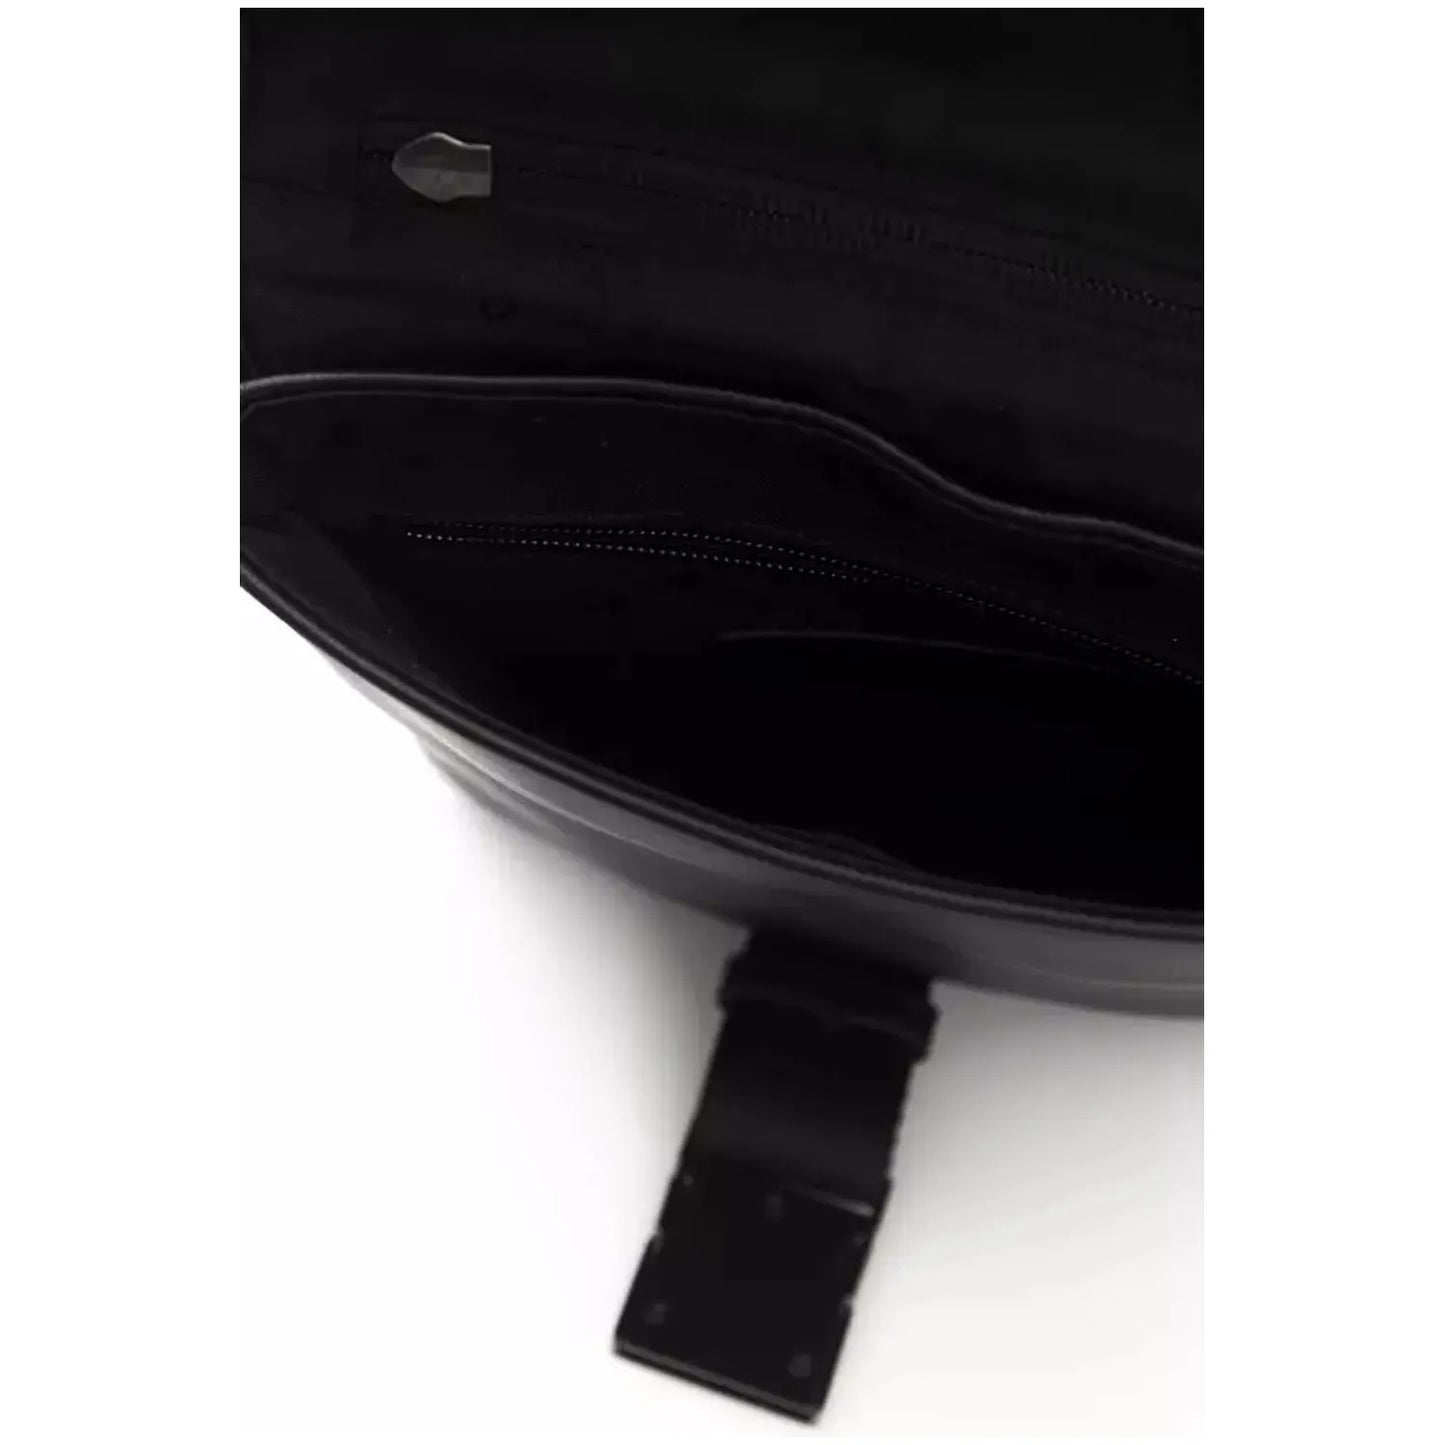 Cerruti 1881 Elegant Black Messenger Bag with Metal Clasp black-polyurethane-messenger-bag product-22959-828693375-16-36cda2c4-a91.webp